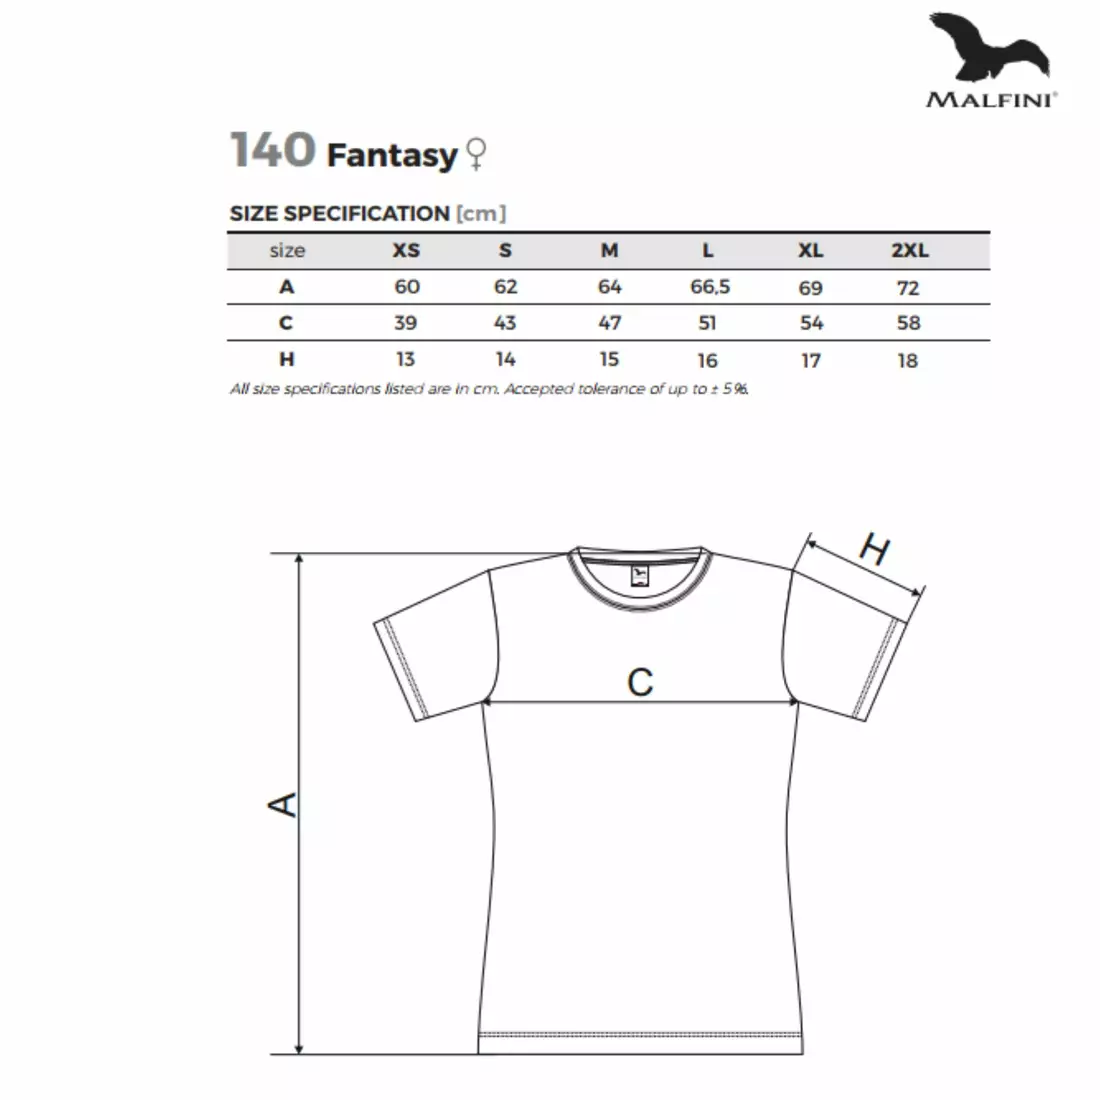 MALFINI FANTASY - Women's Sports T-Shirt 100% Polyester, Navy Blue 1400512-140